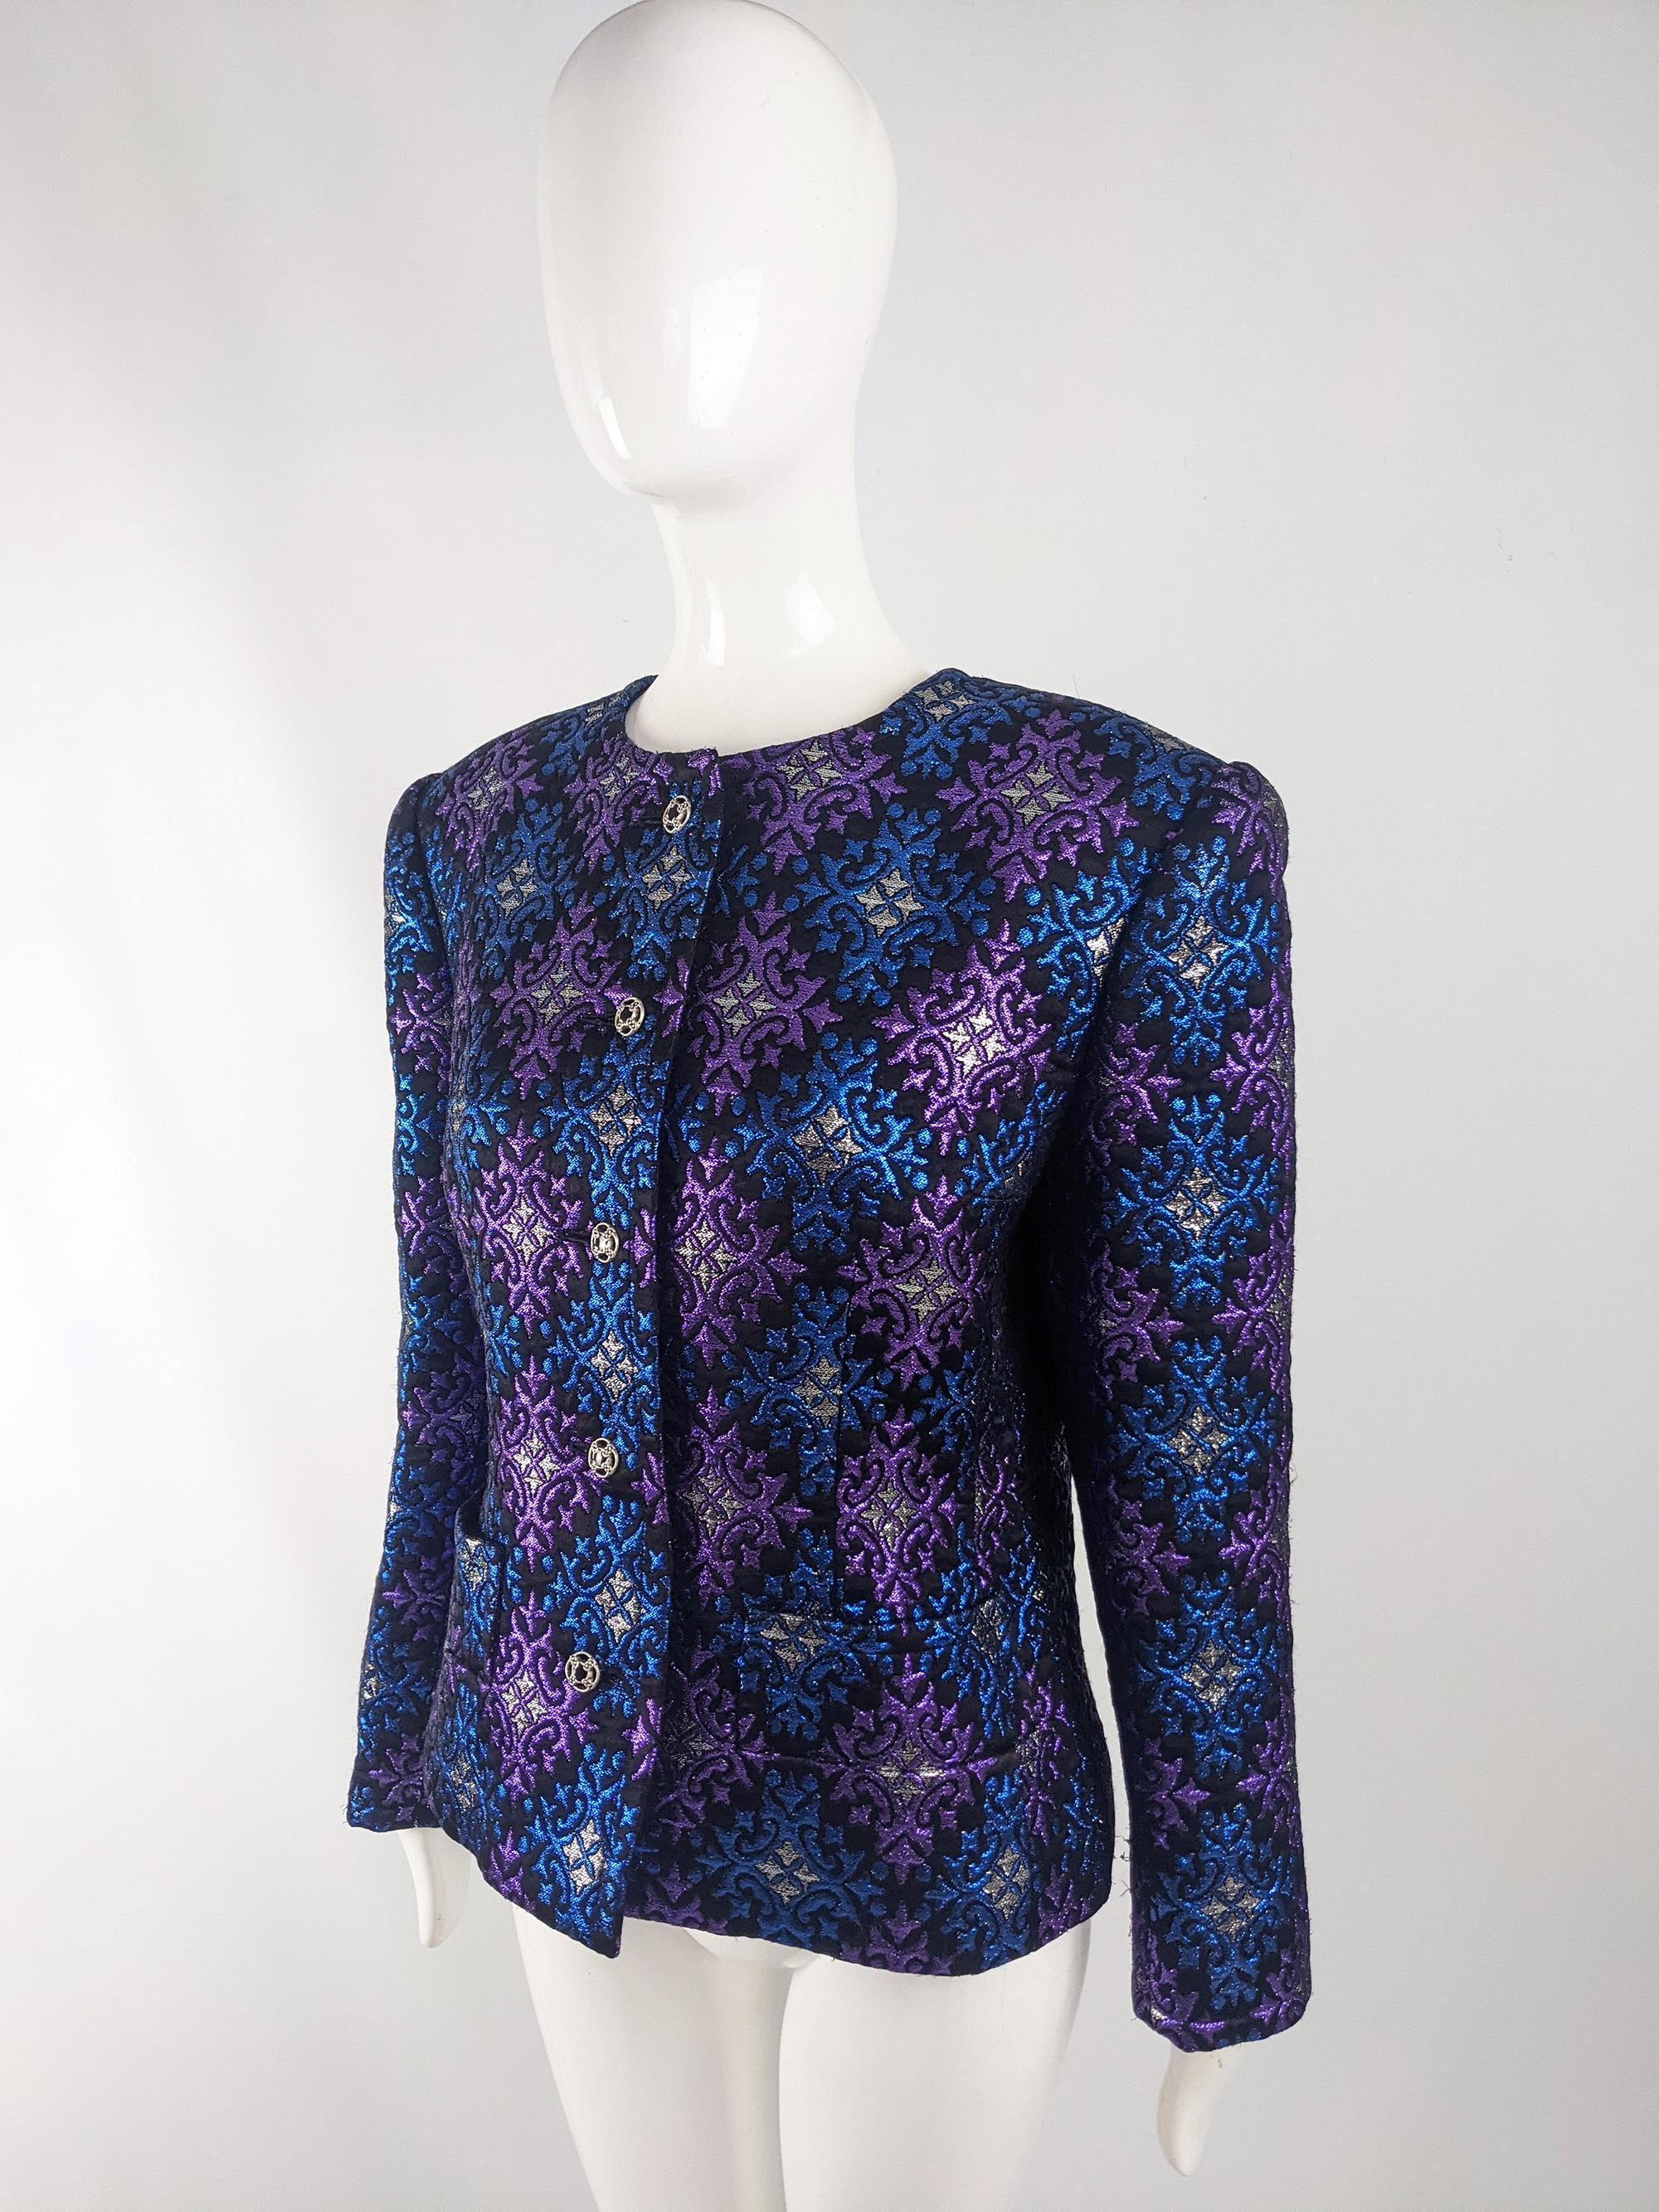 Givenchy Vintage 1980s Black Blue & Purple Brocade Jacket Evening Lamé Coat 1